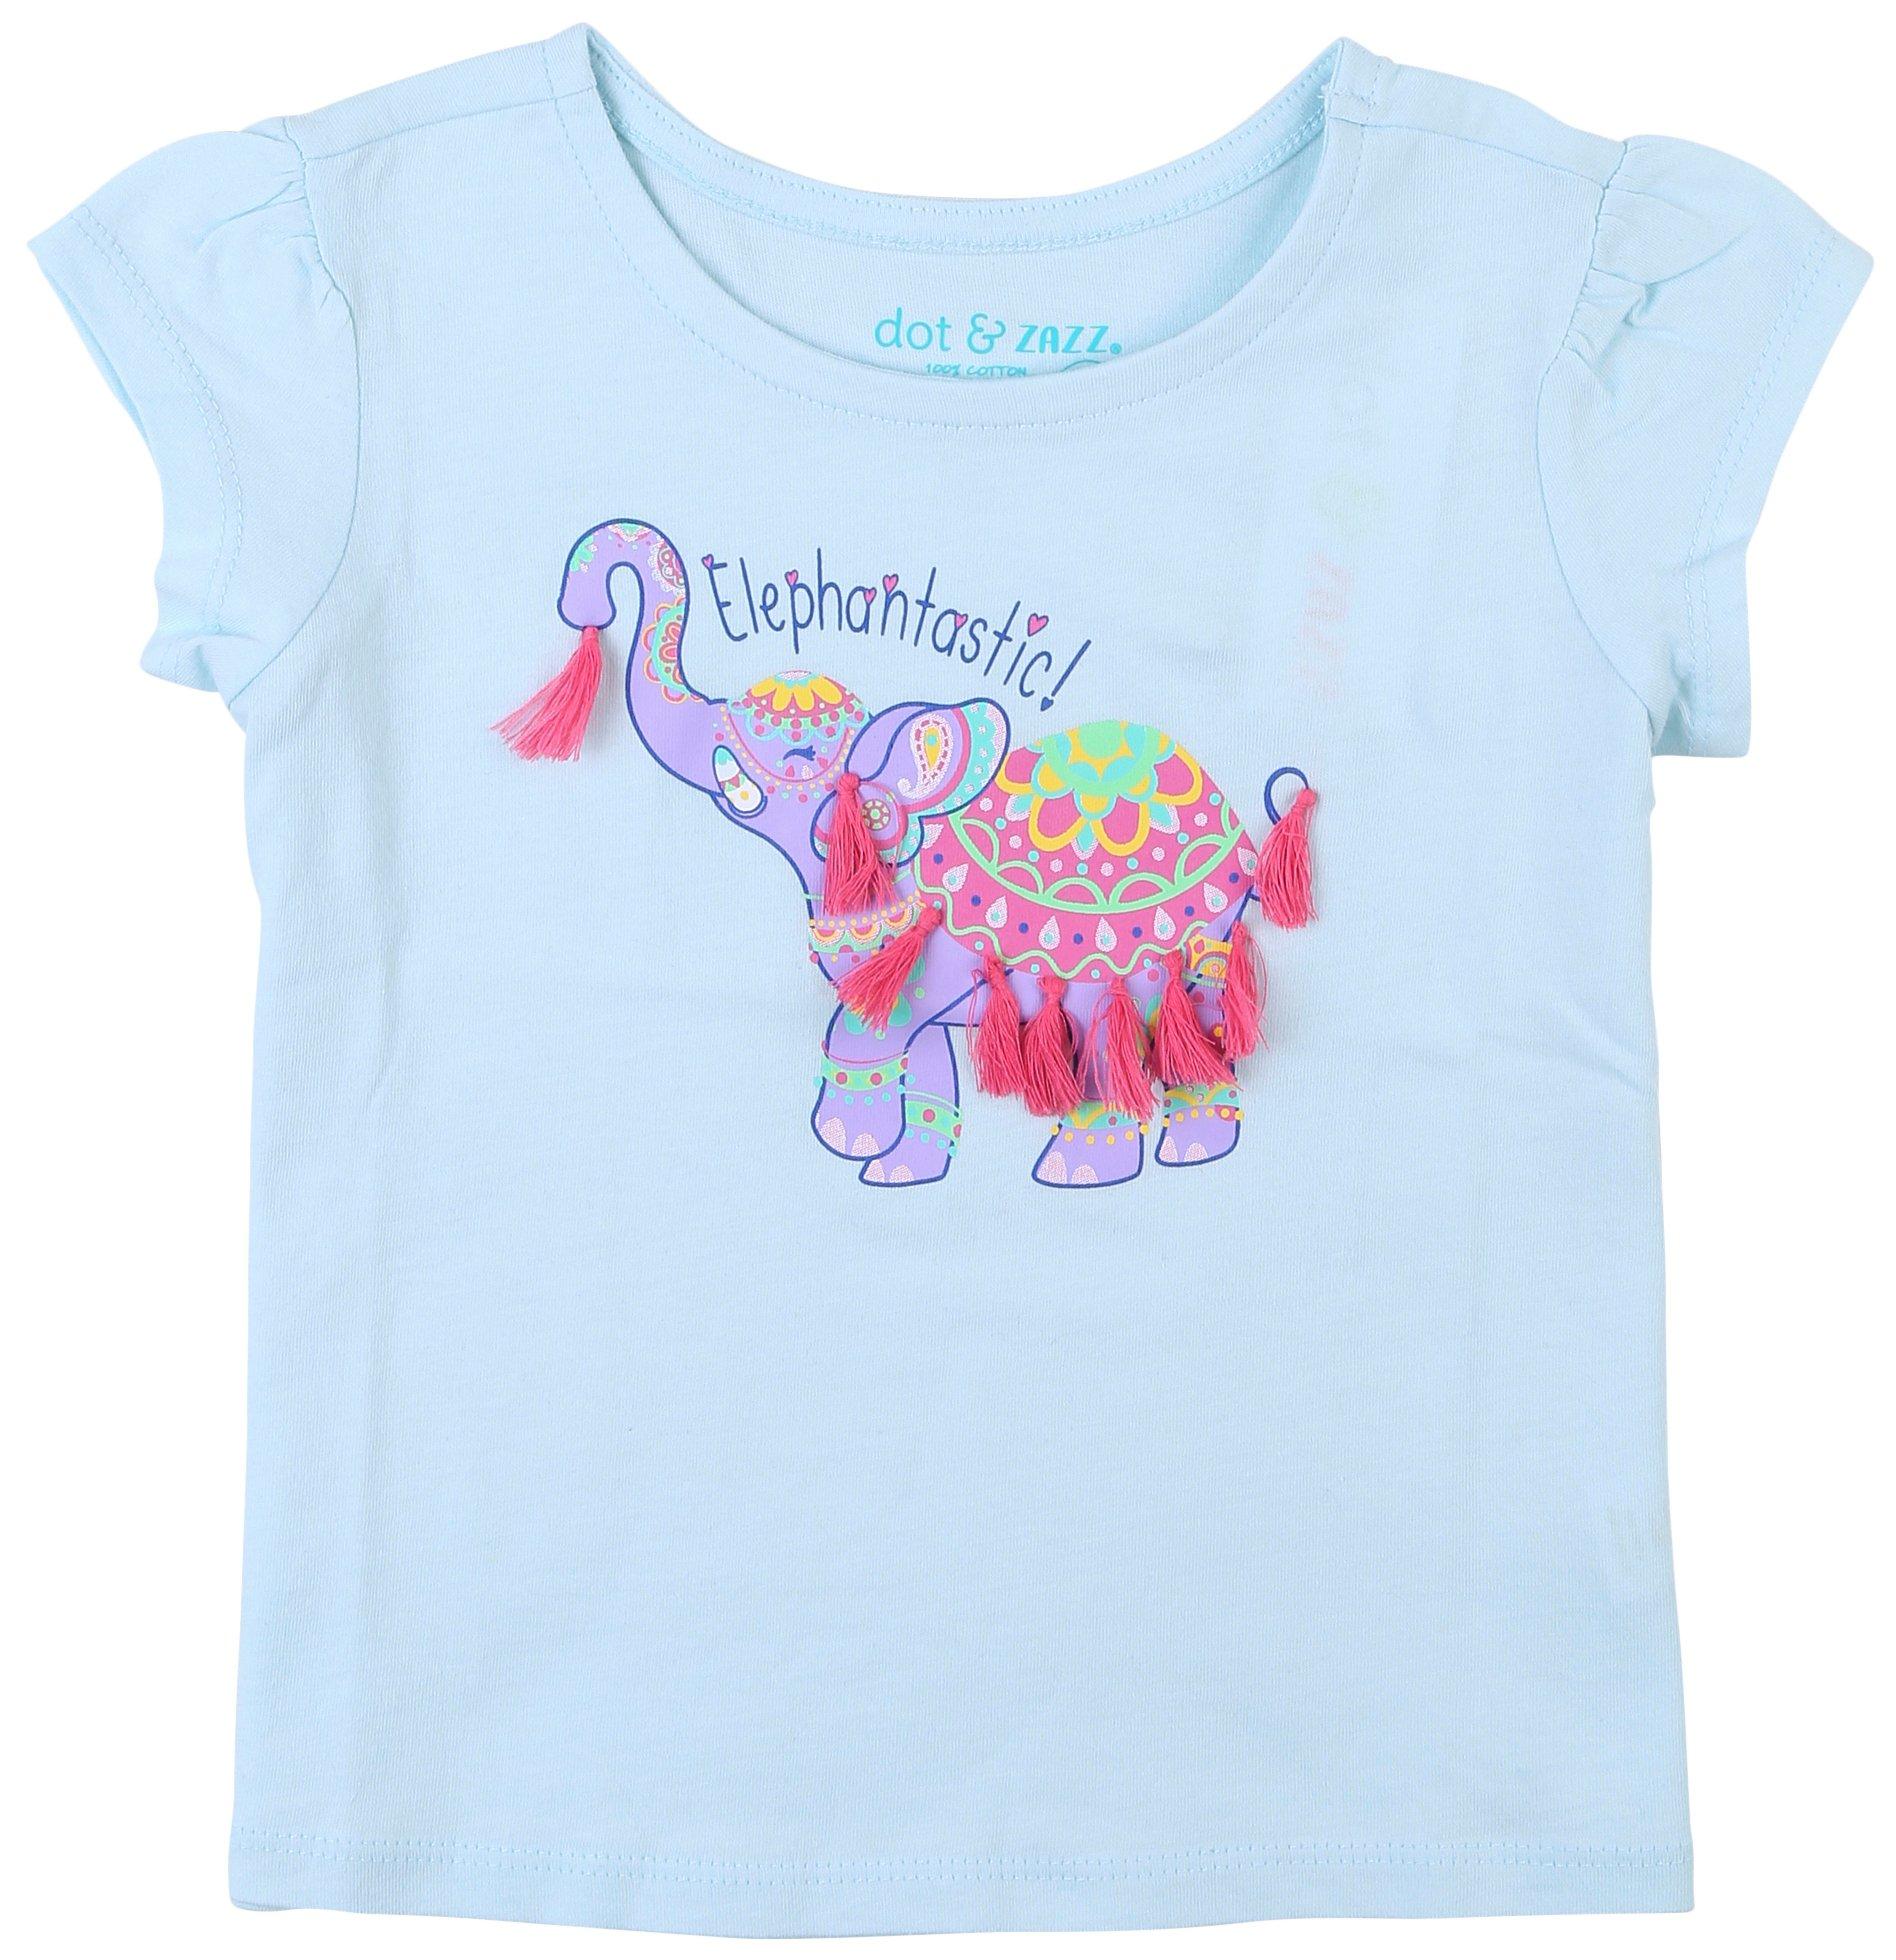 DOT & ZAZZ Baby Girls Elephantastic Short Sleeve T-Shirt